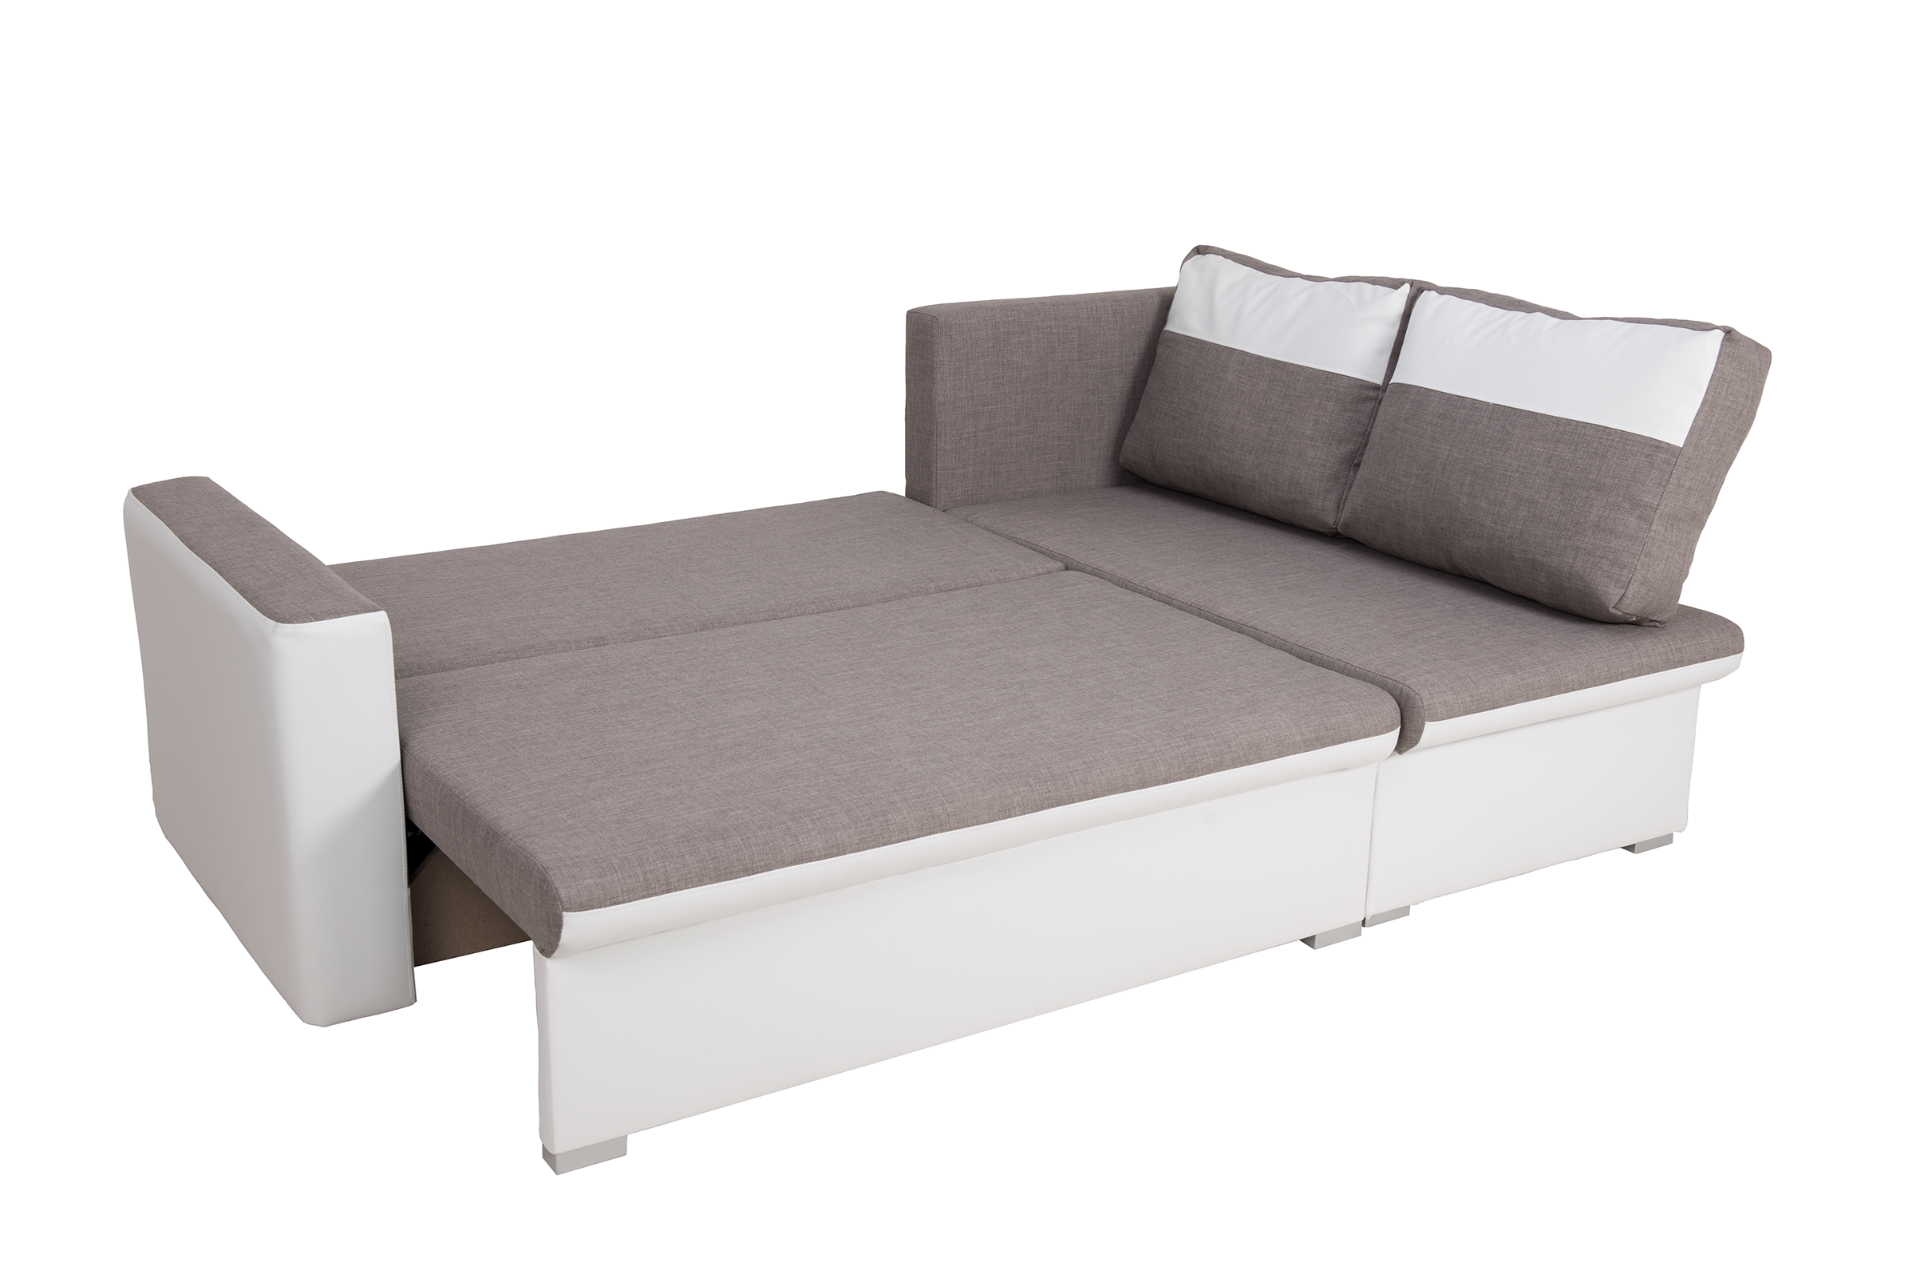 Brand New FlVio Right Hand Facing White/Grey Corner Pull Out Sofa Bed With Storage - Image 2 of 3